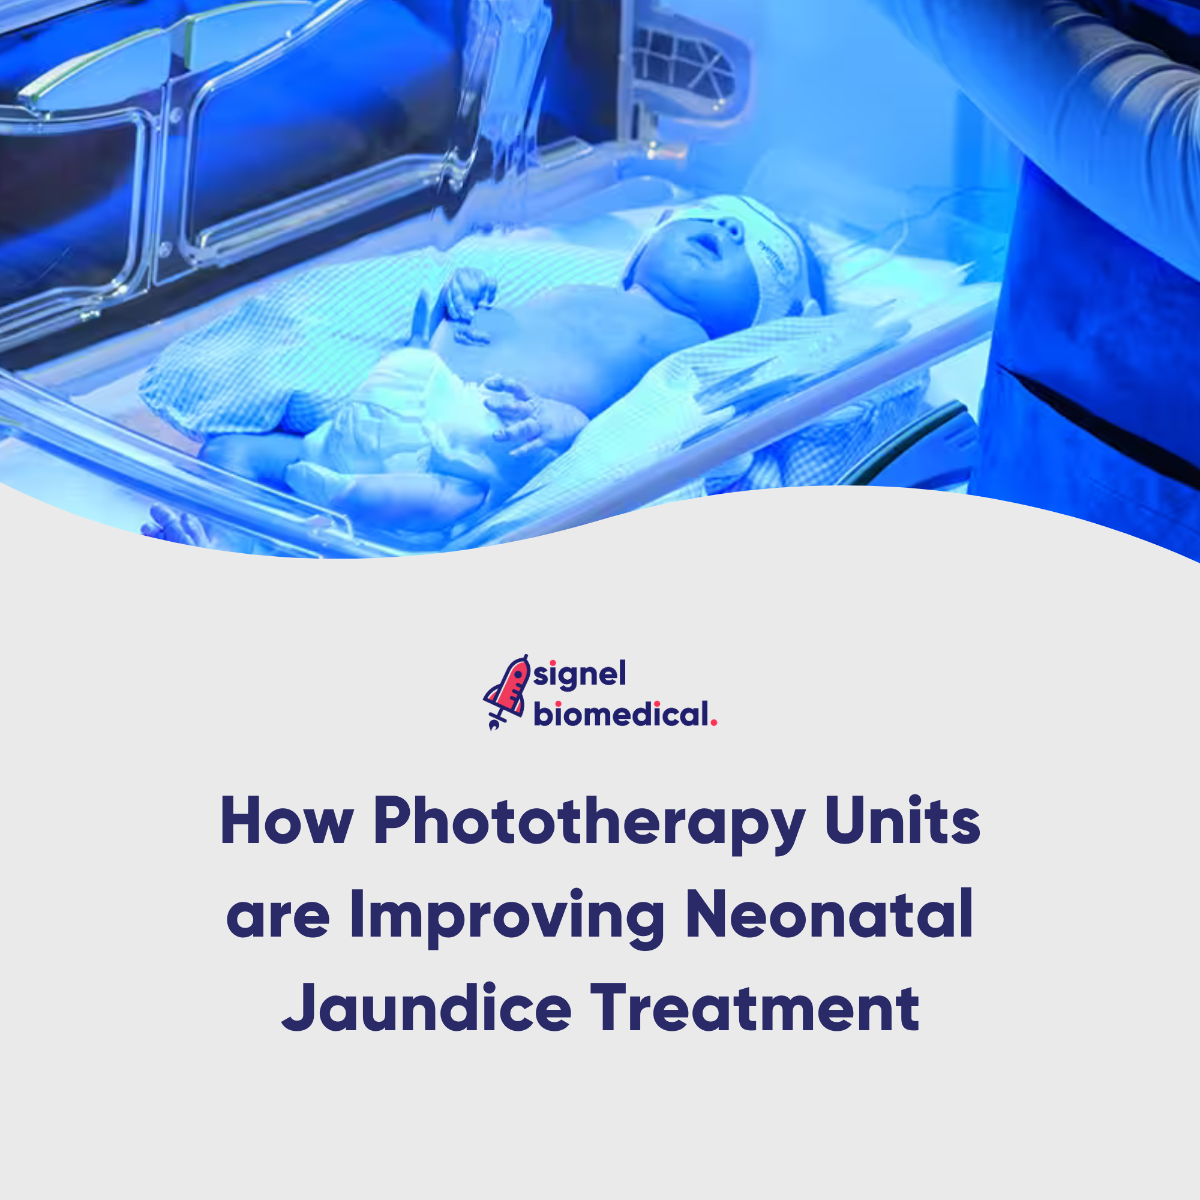 How Phototherapy Units are Improving Neonatal Jaundice Treatment